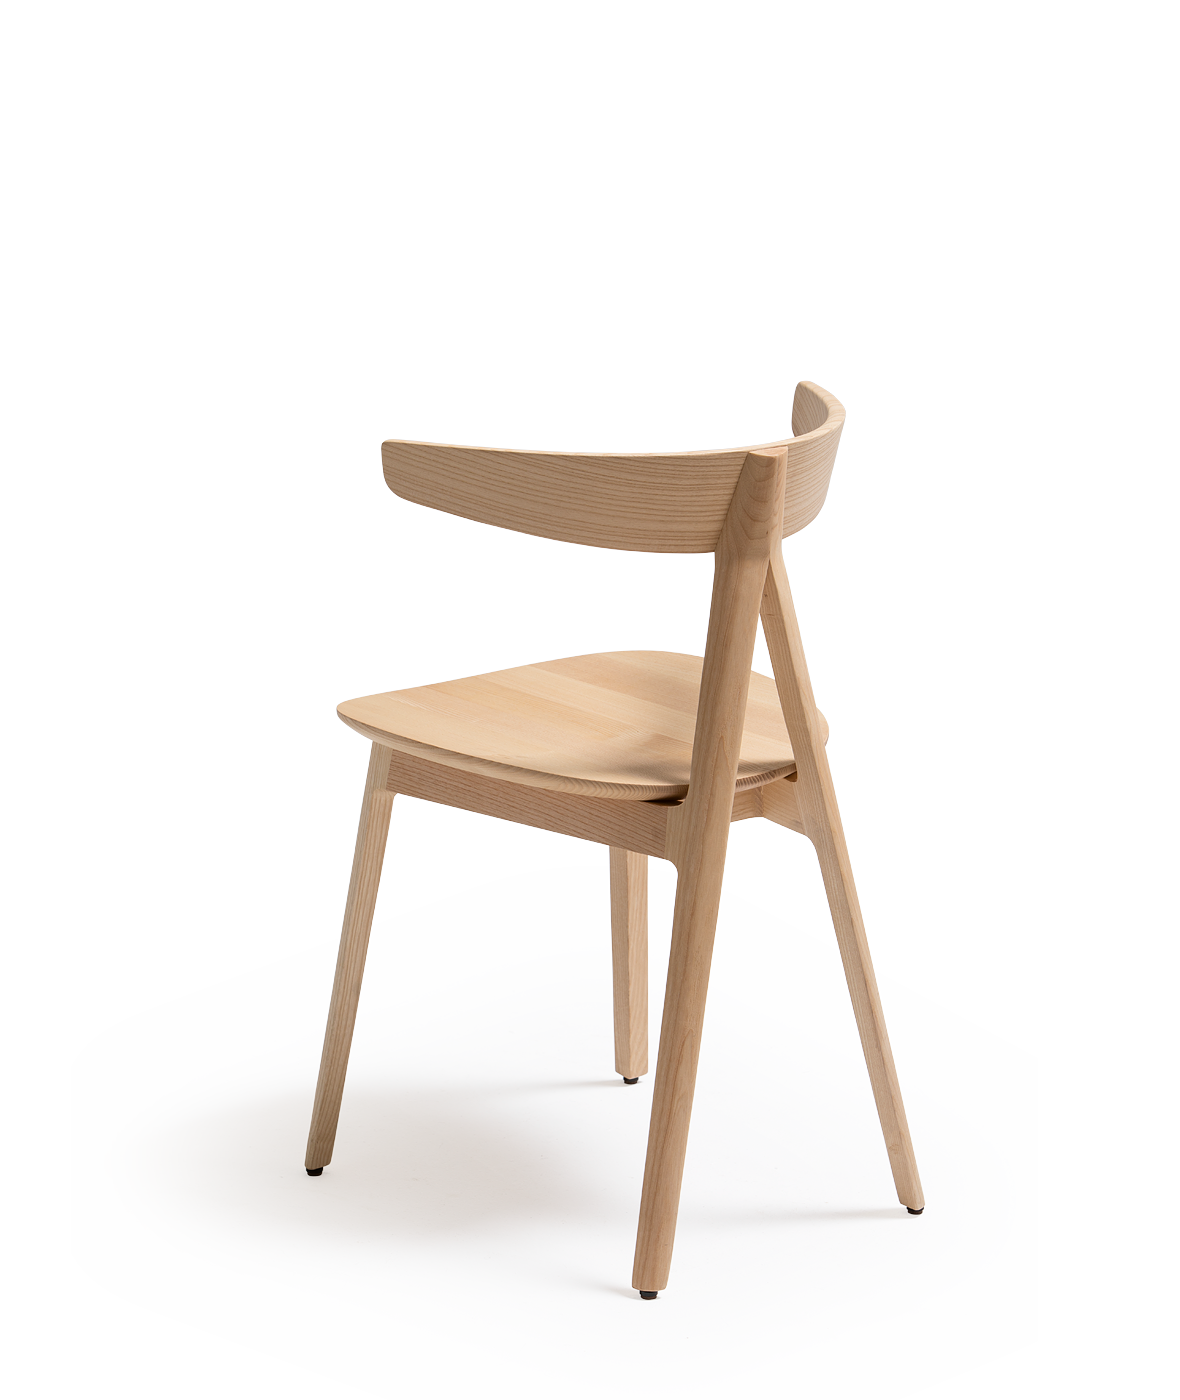 Vergés - Compass chair with wooden legs